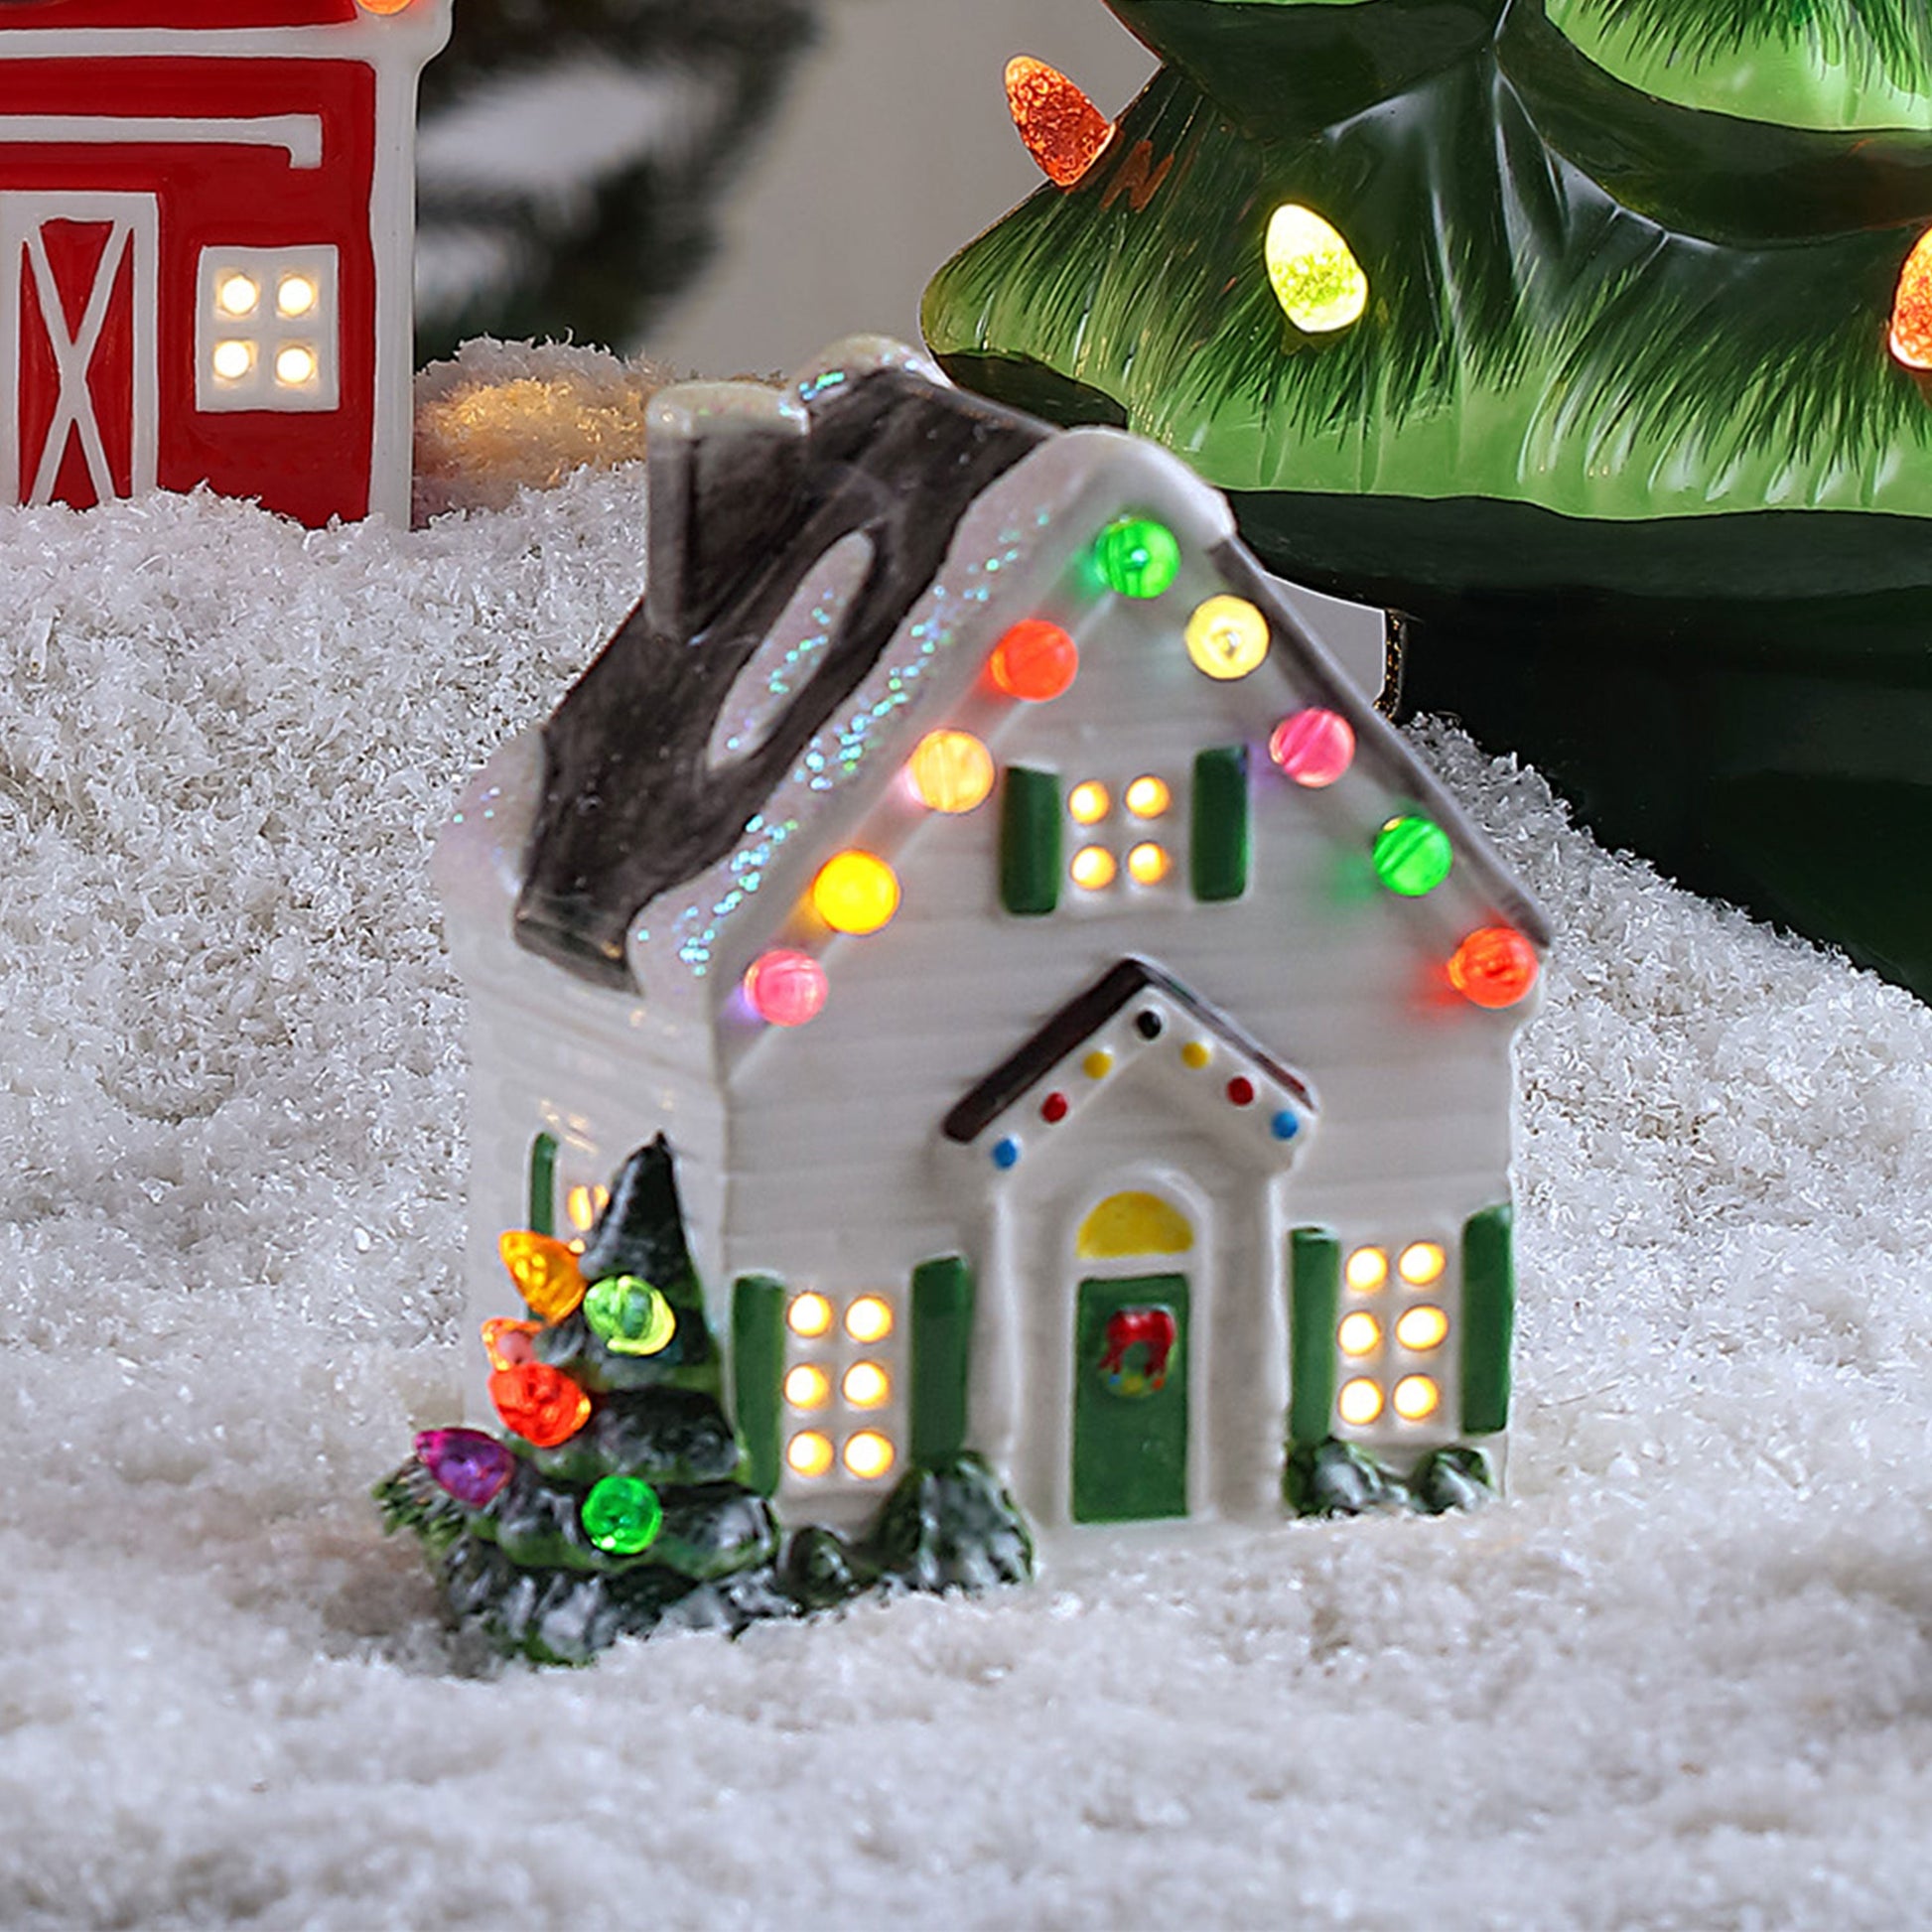 4.6" Nostalgic Ceramic Village House - Mr. Christmas